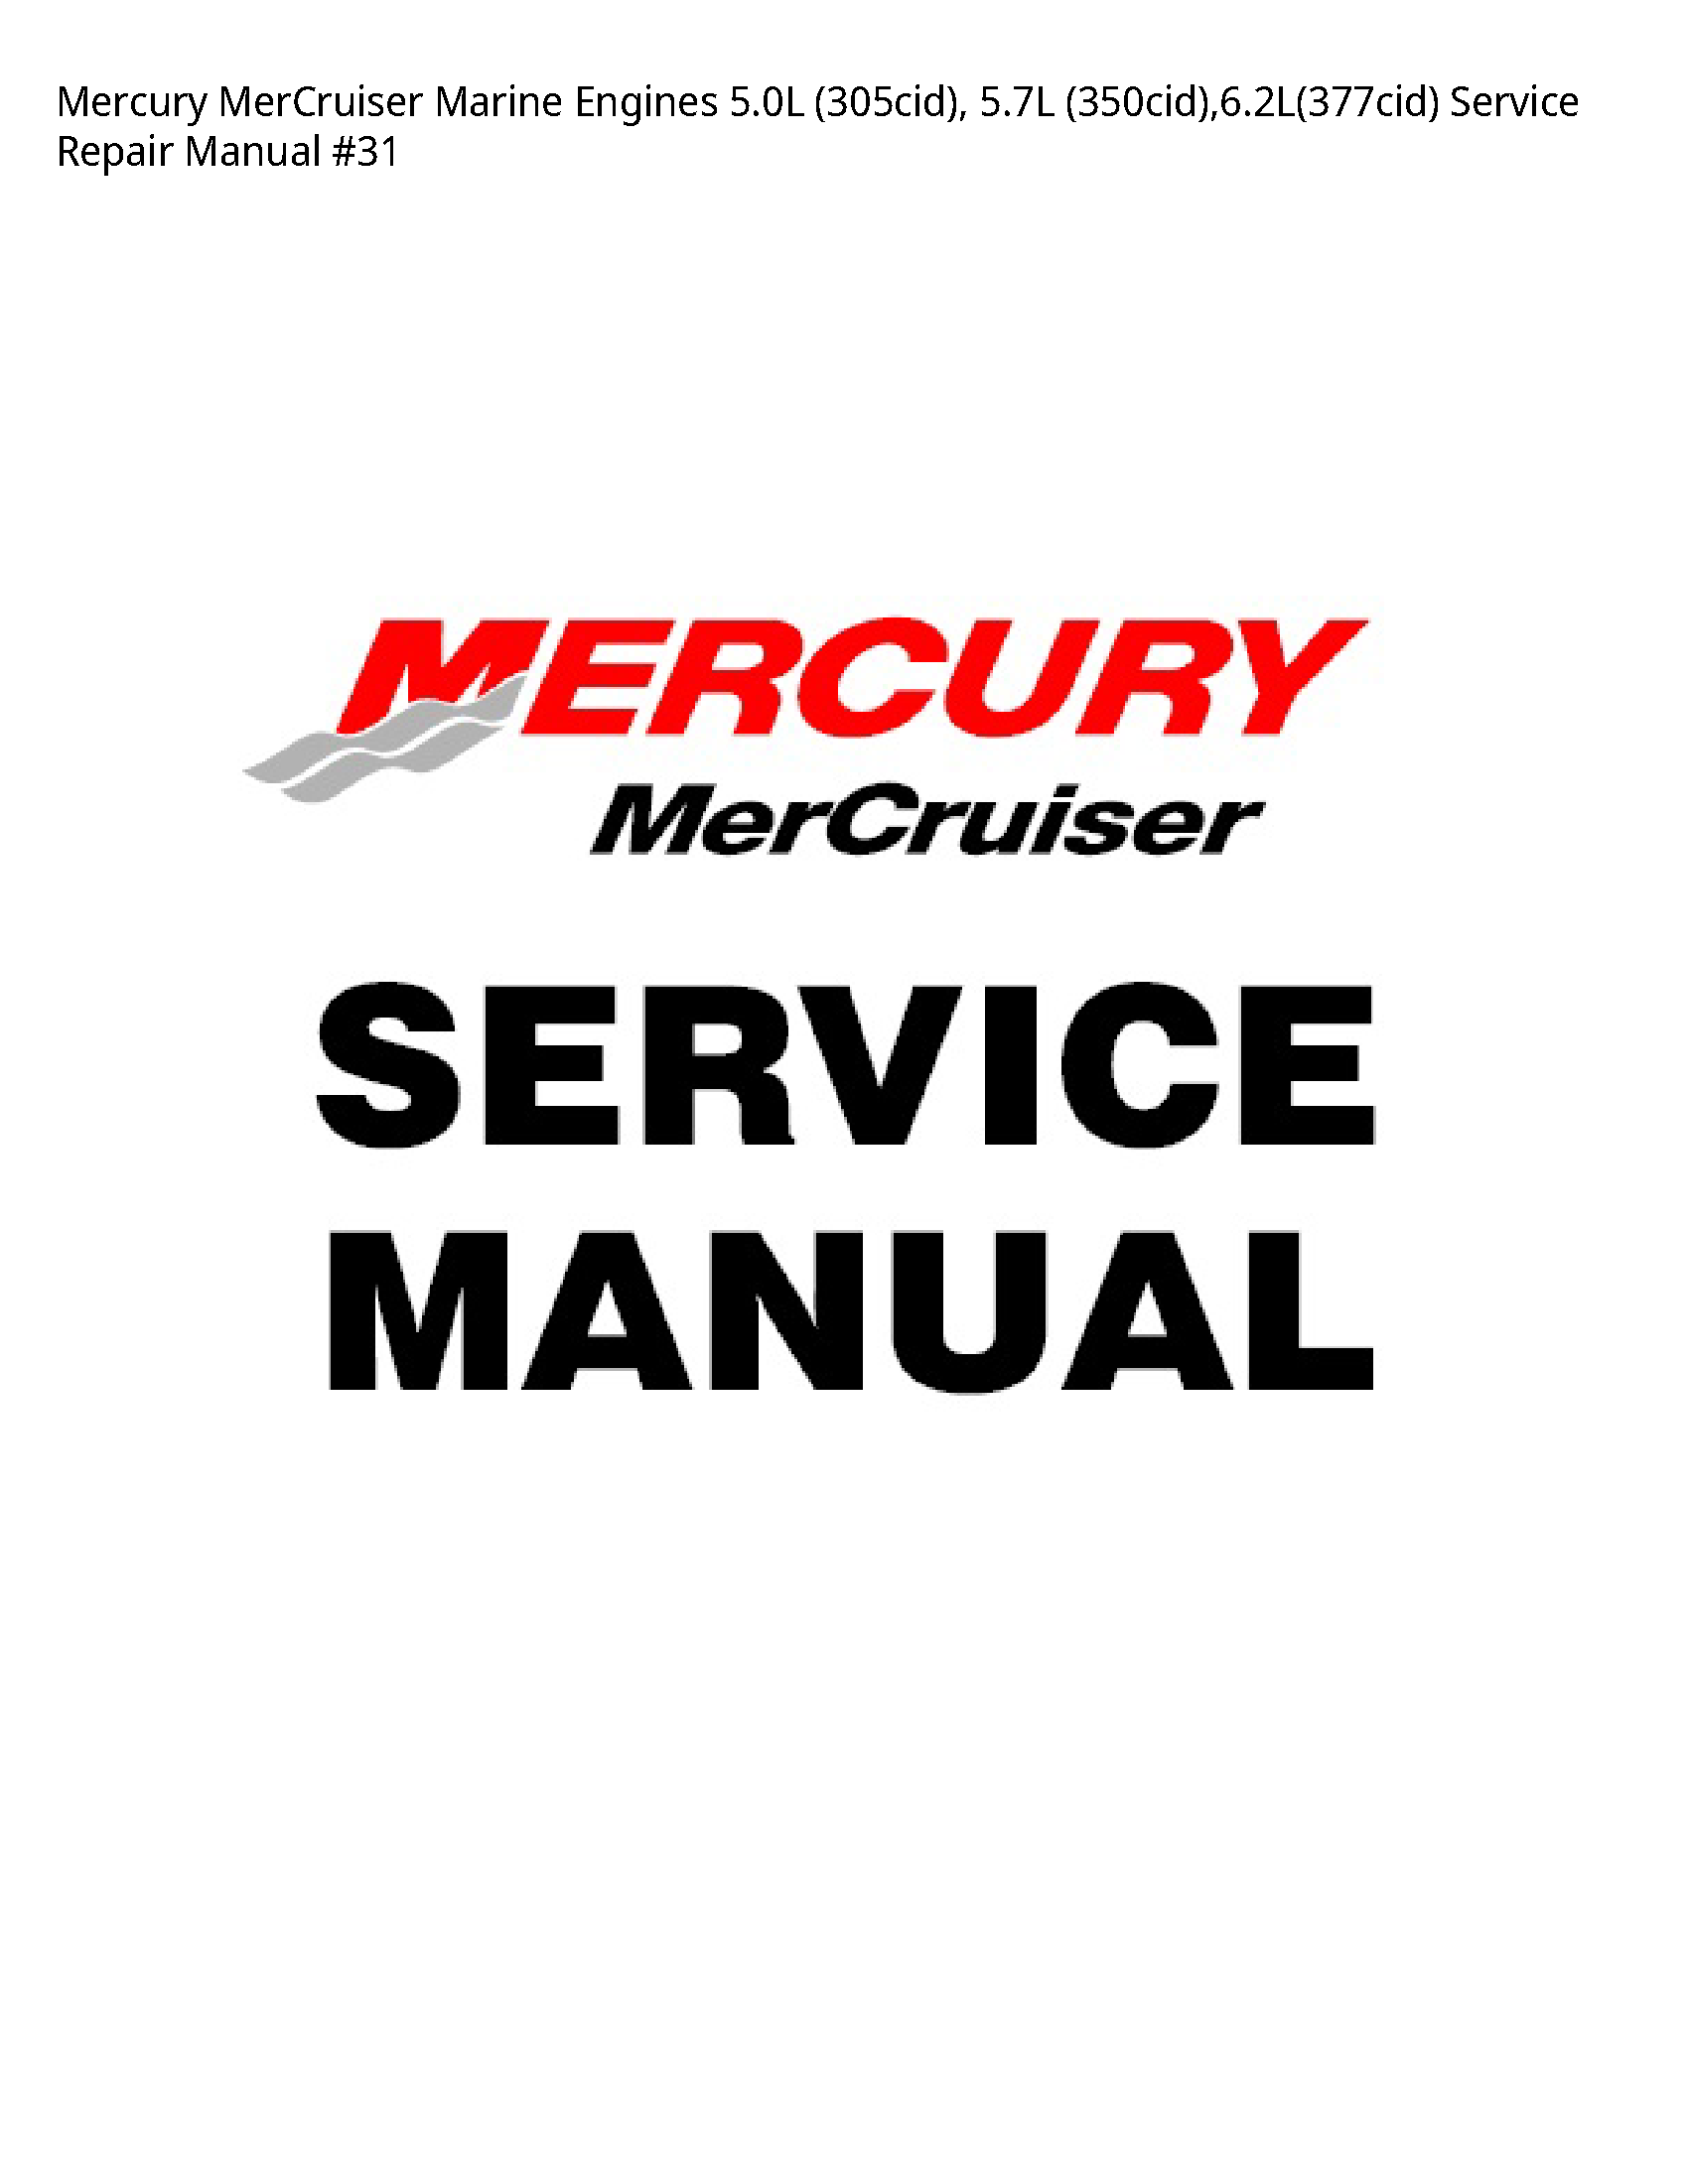 Mercury 5.0L MerCruiser Marine Engines manual